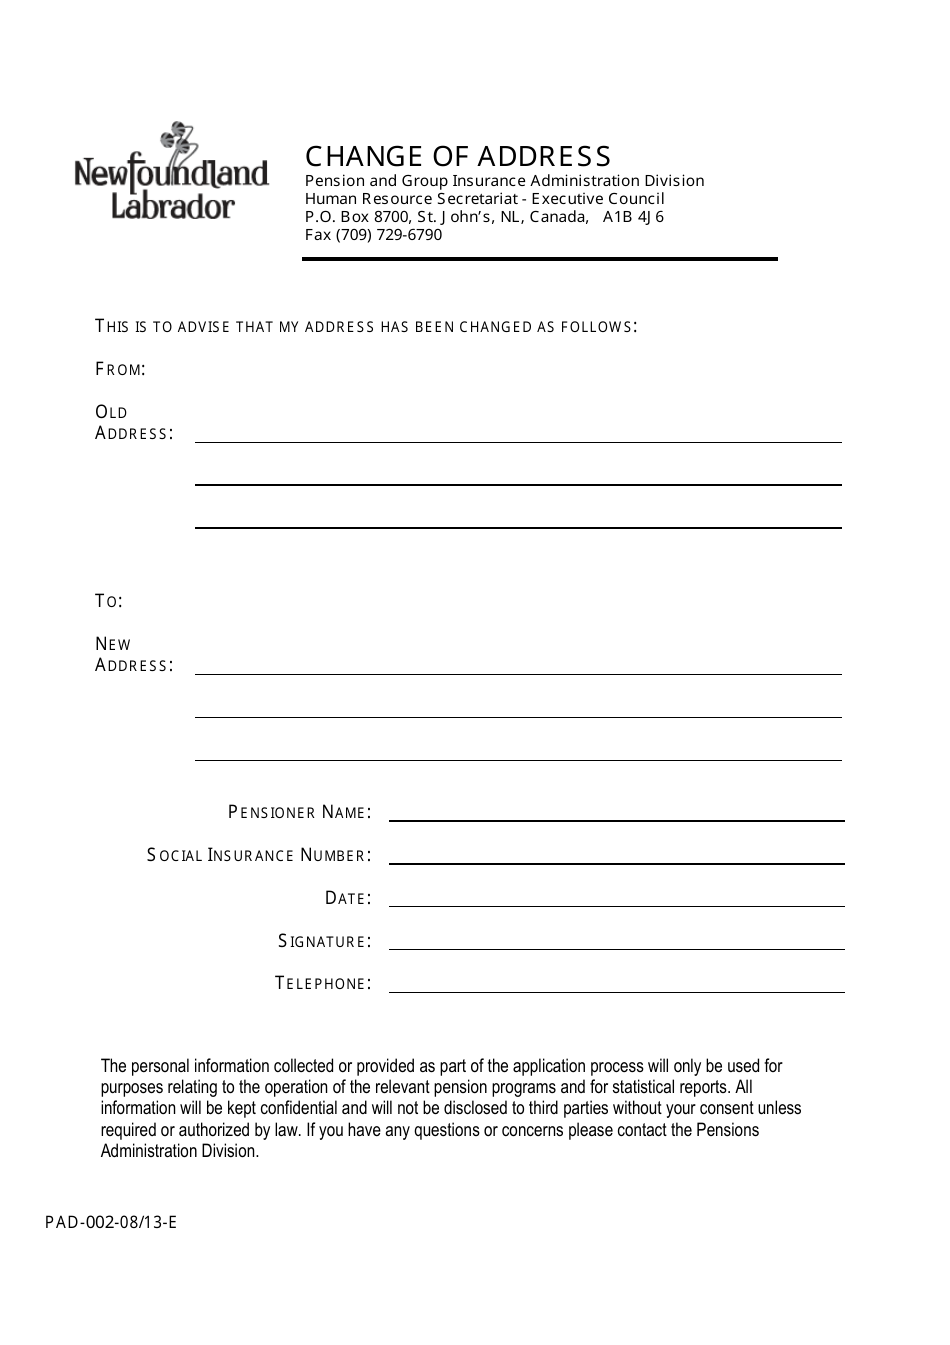 Form PAD-002 Change of Address - Newfoundland and Labrador, Canada, Page 1